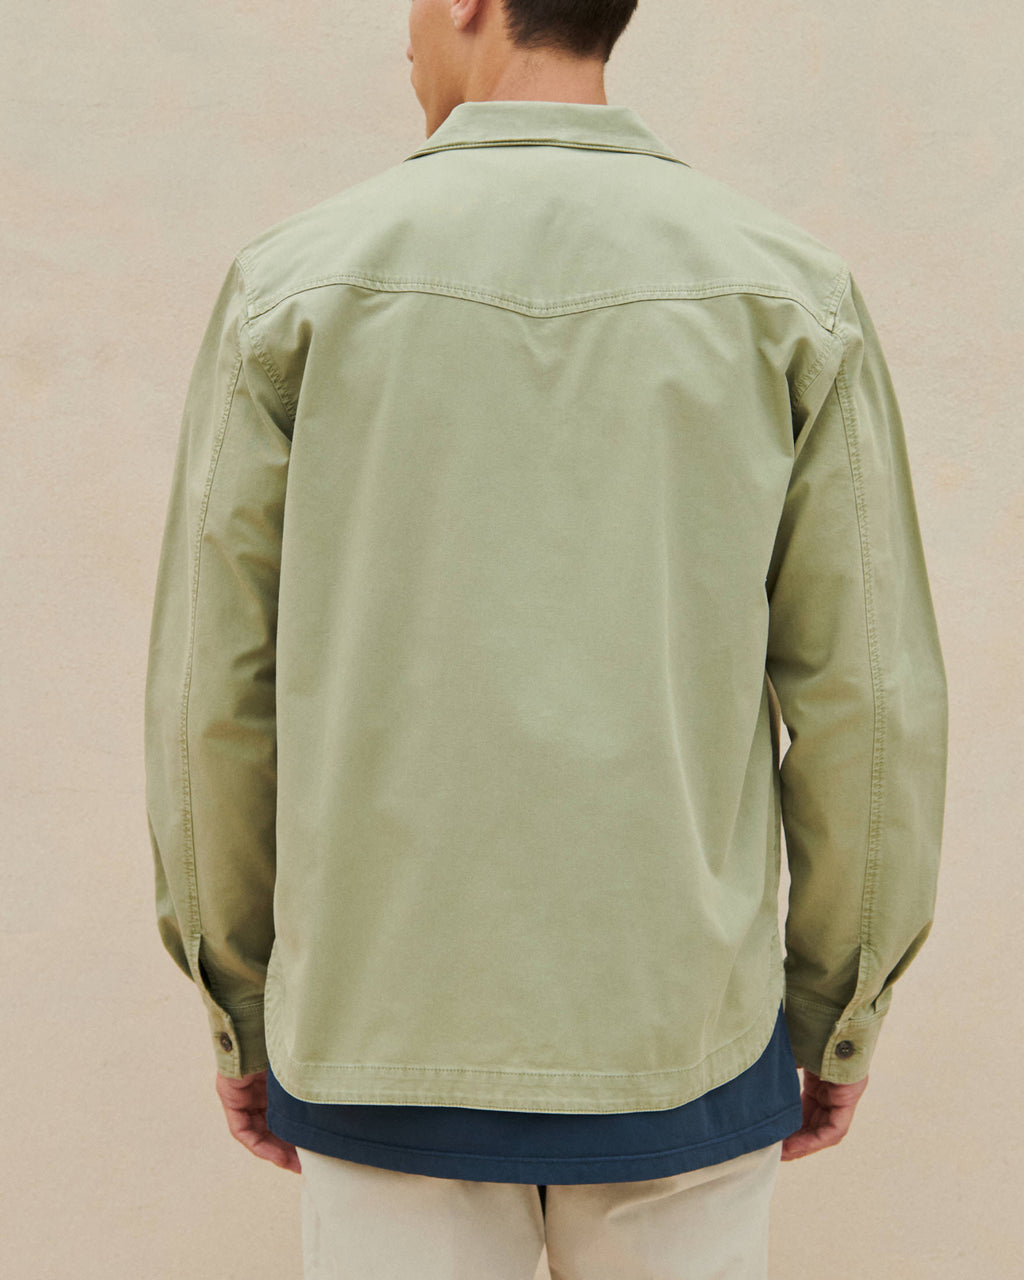 Santa Fe Field Jacket - Stonewashed Cotton - Military Green